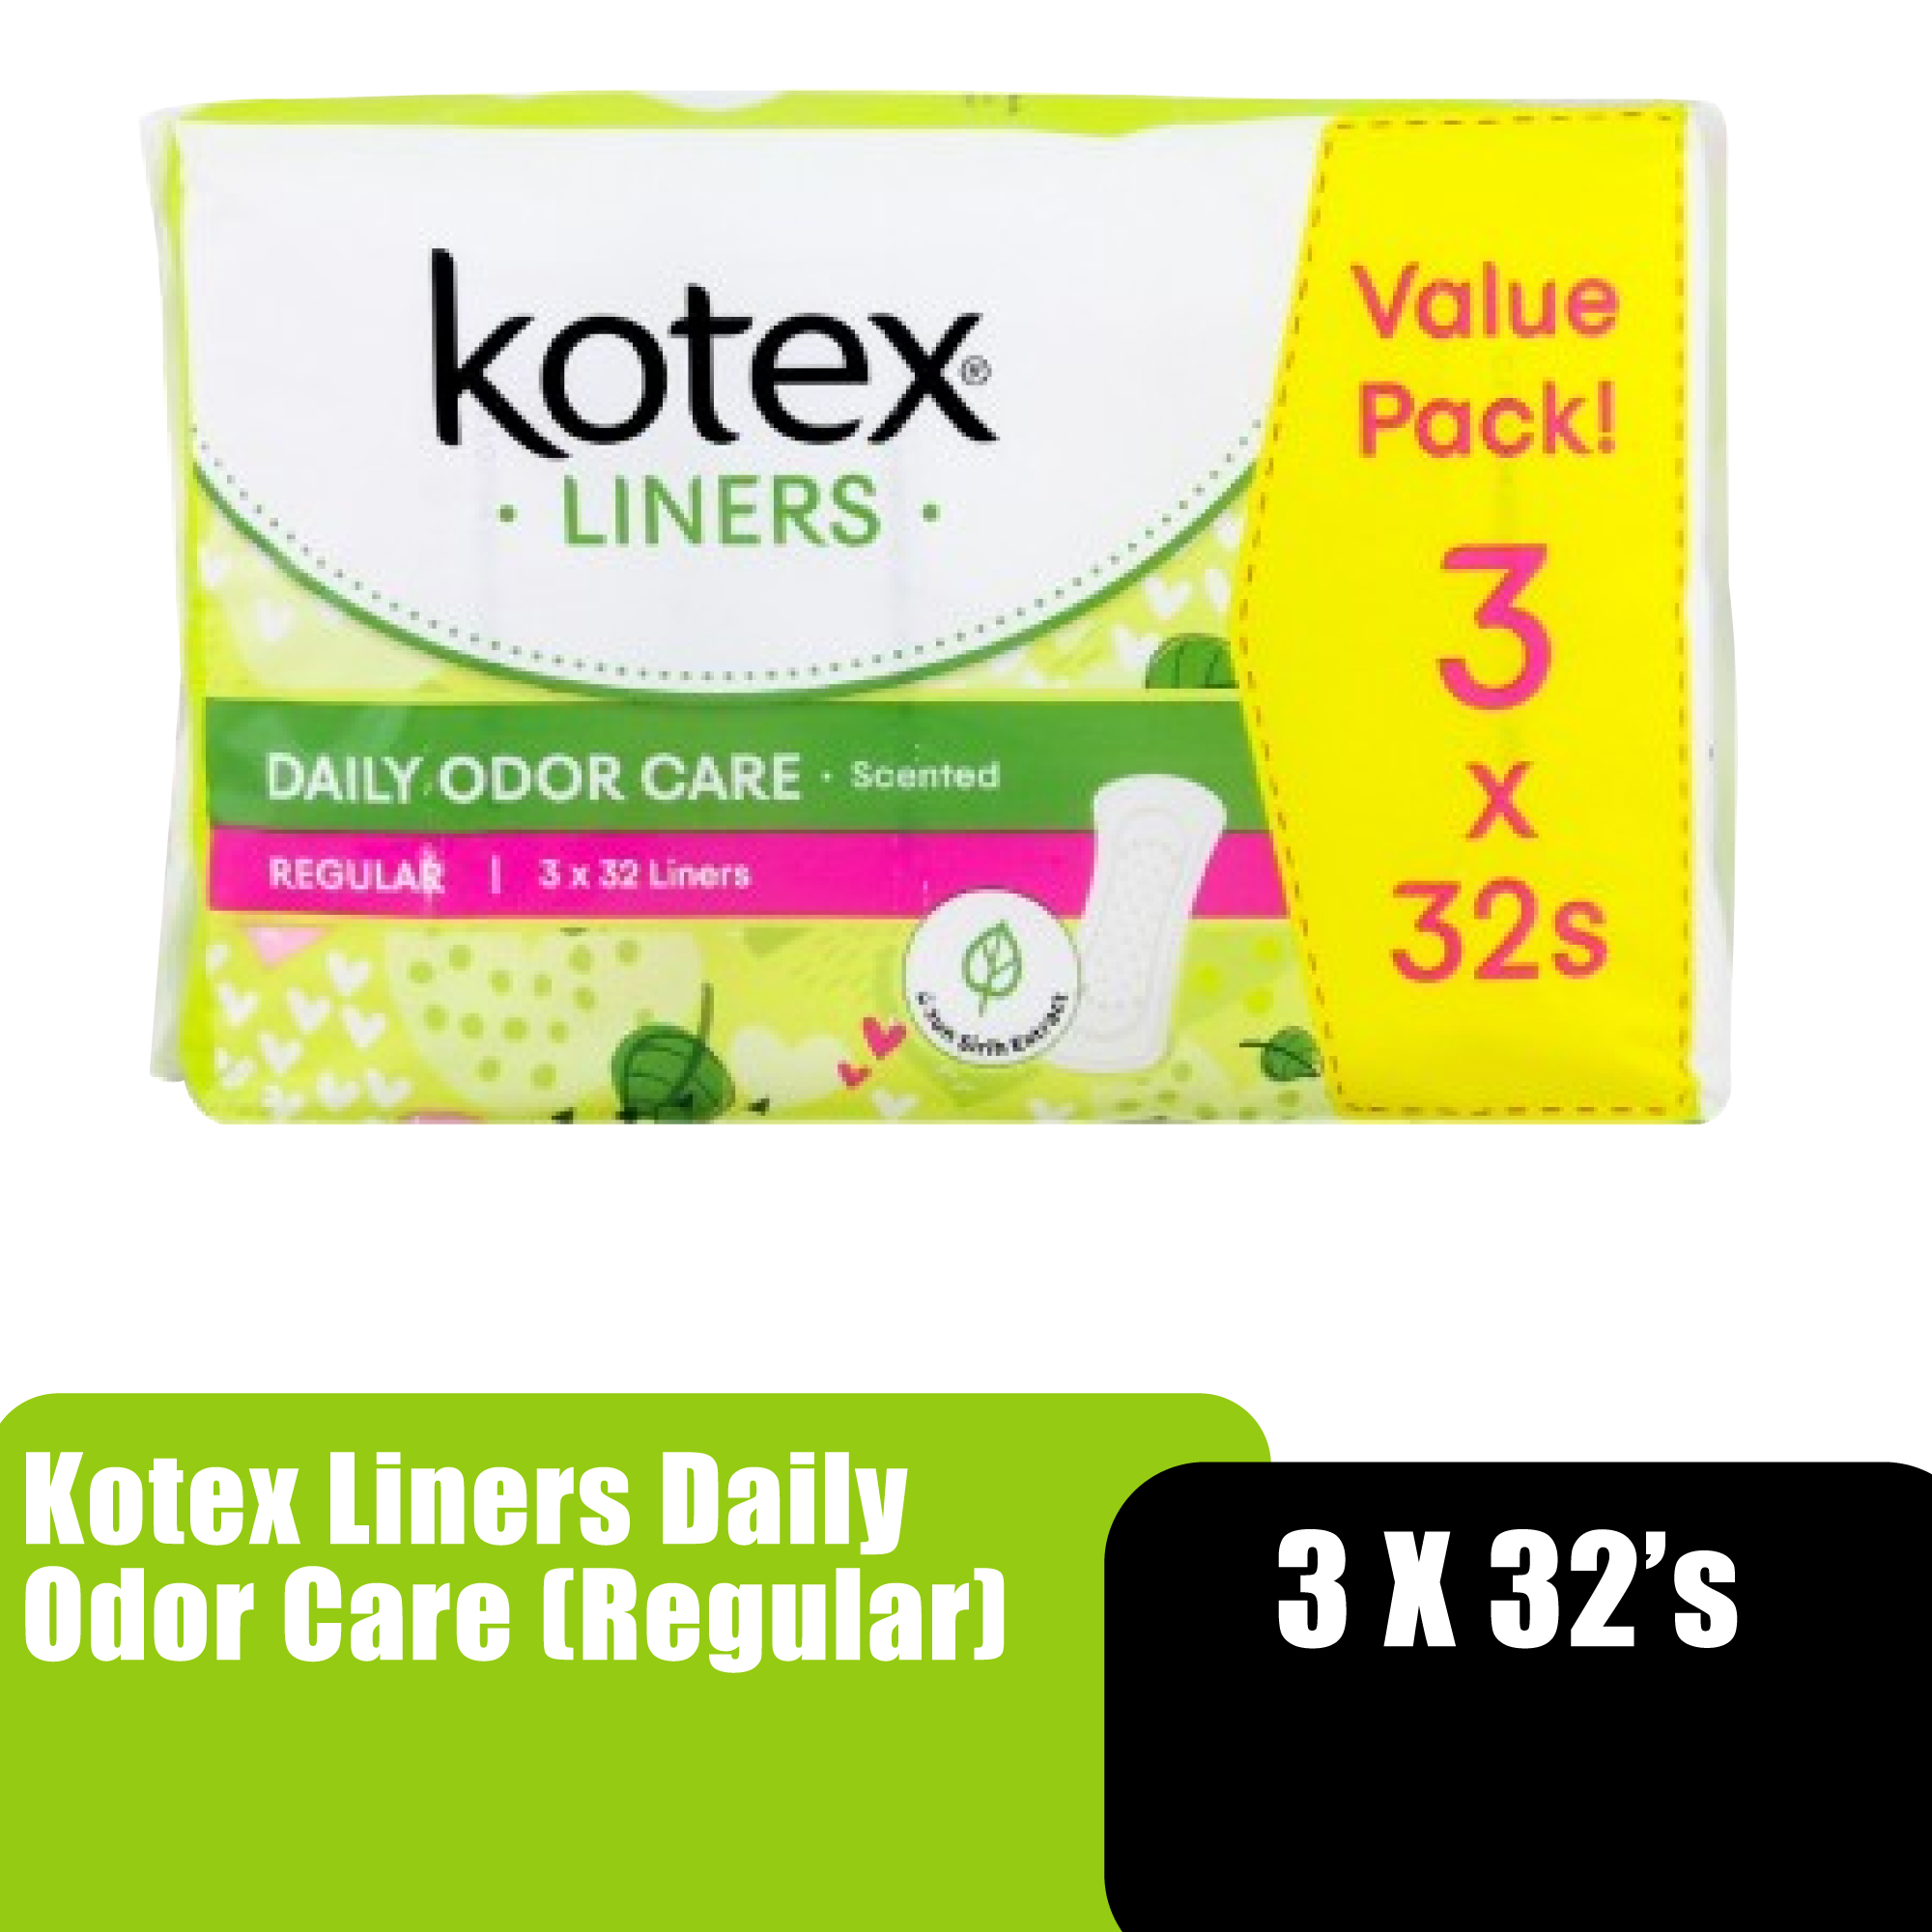 KOTEX LINERS DAILY ODOR CARE 32'S X 3 - LONGER & WIDER (REGULAR)